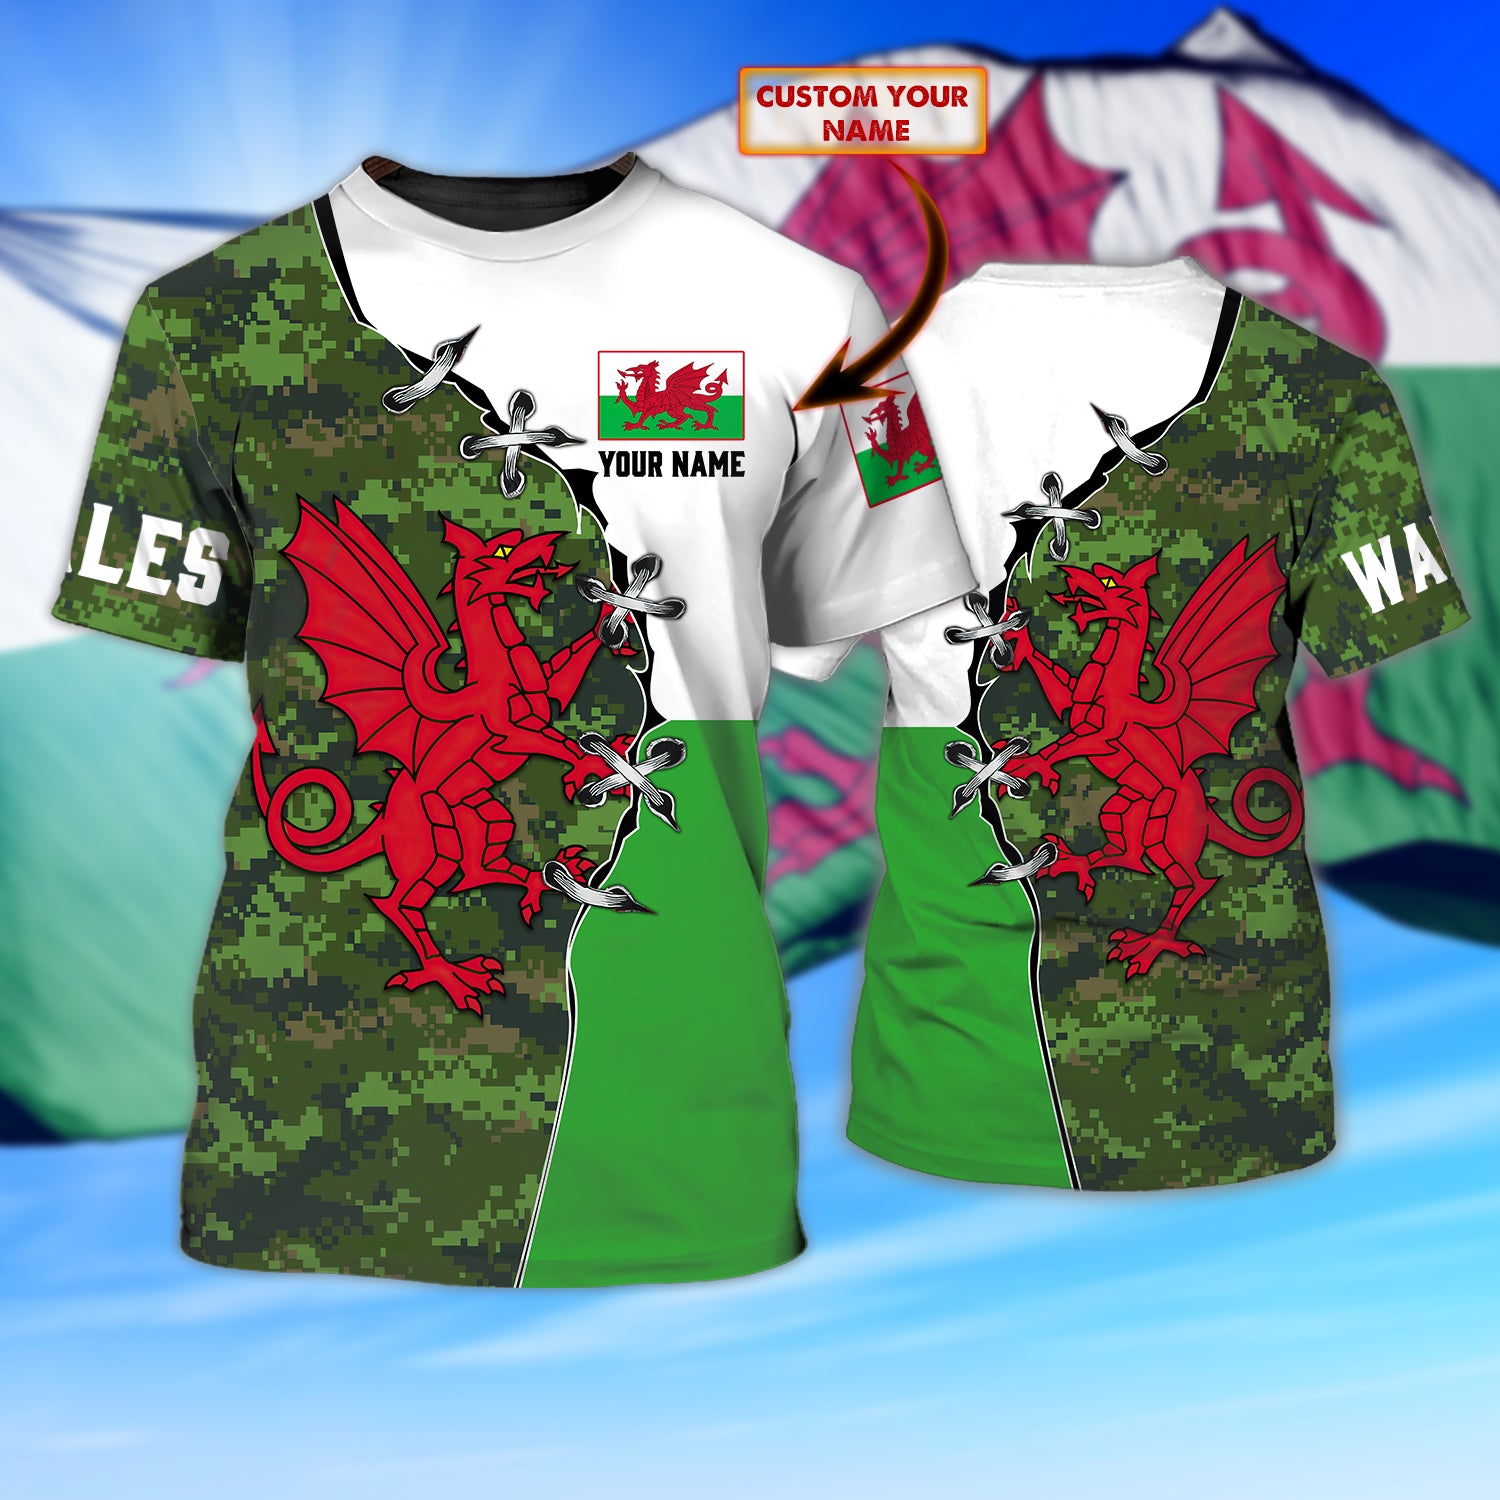 Wales - Cymru 061 - Cymru - Personalized Name 3D Tshirt - DAT93